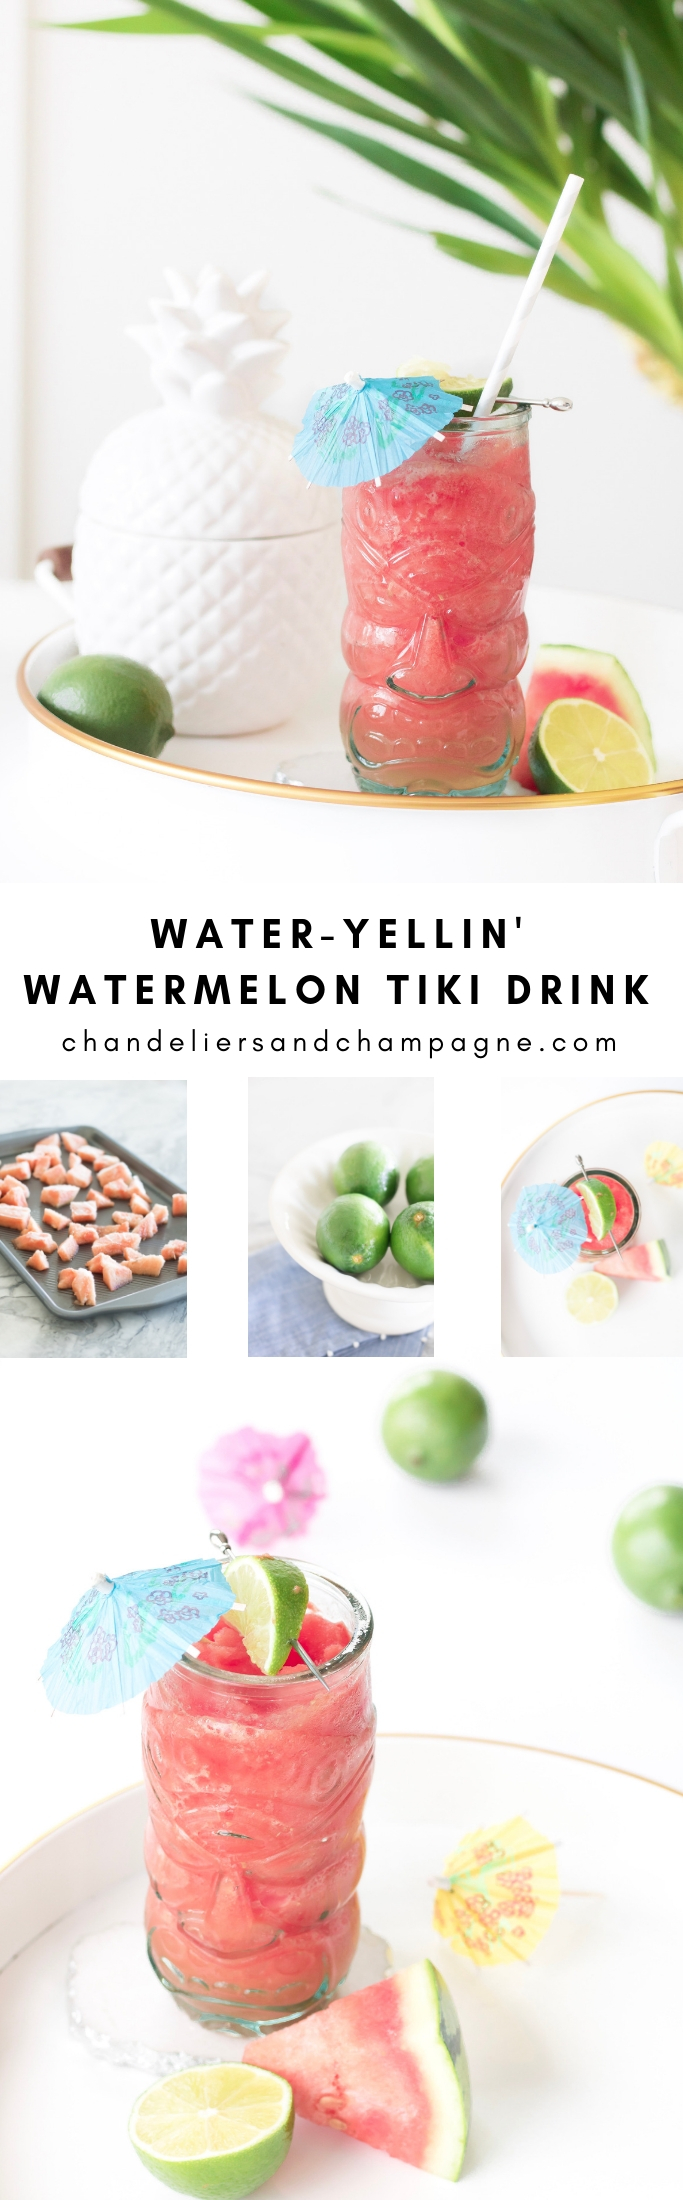 Water-yellin' Watermelon frozen tiki drink recipe: blended tiki cocktail drink recipe